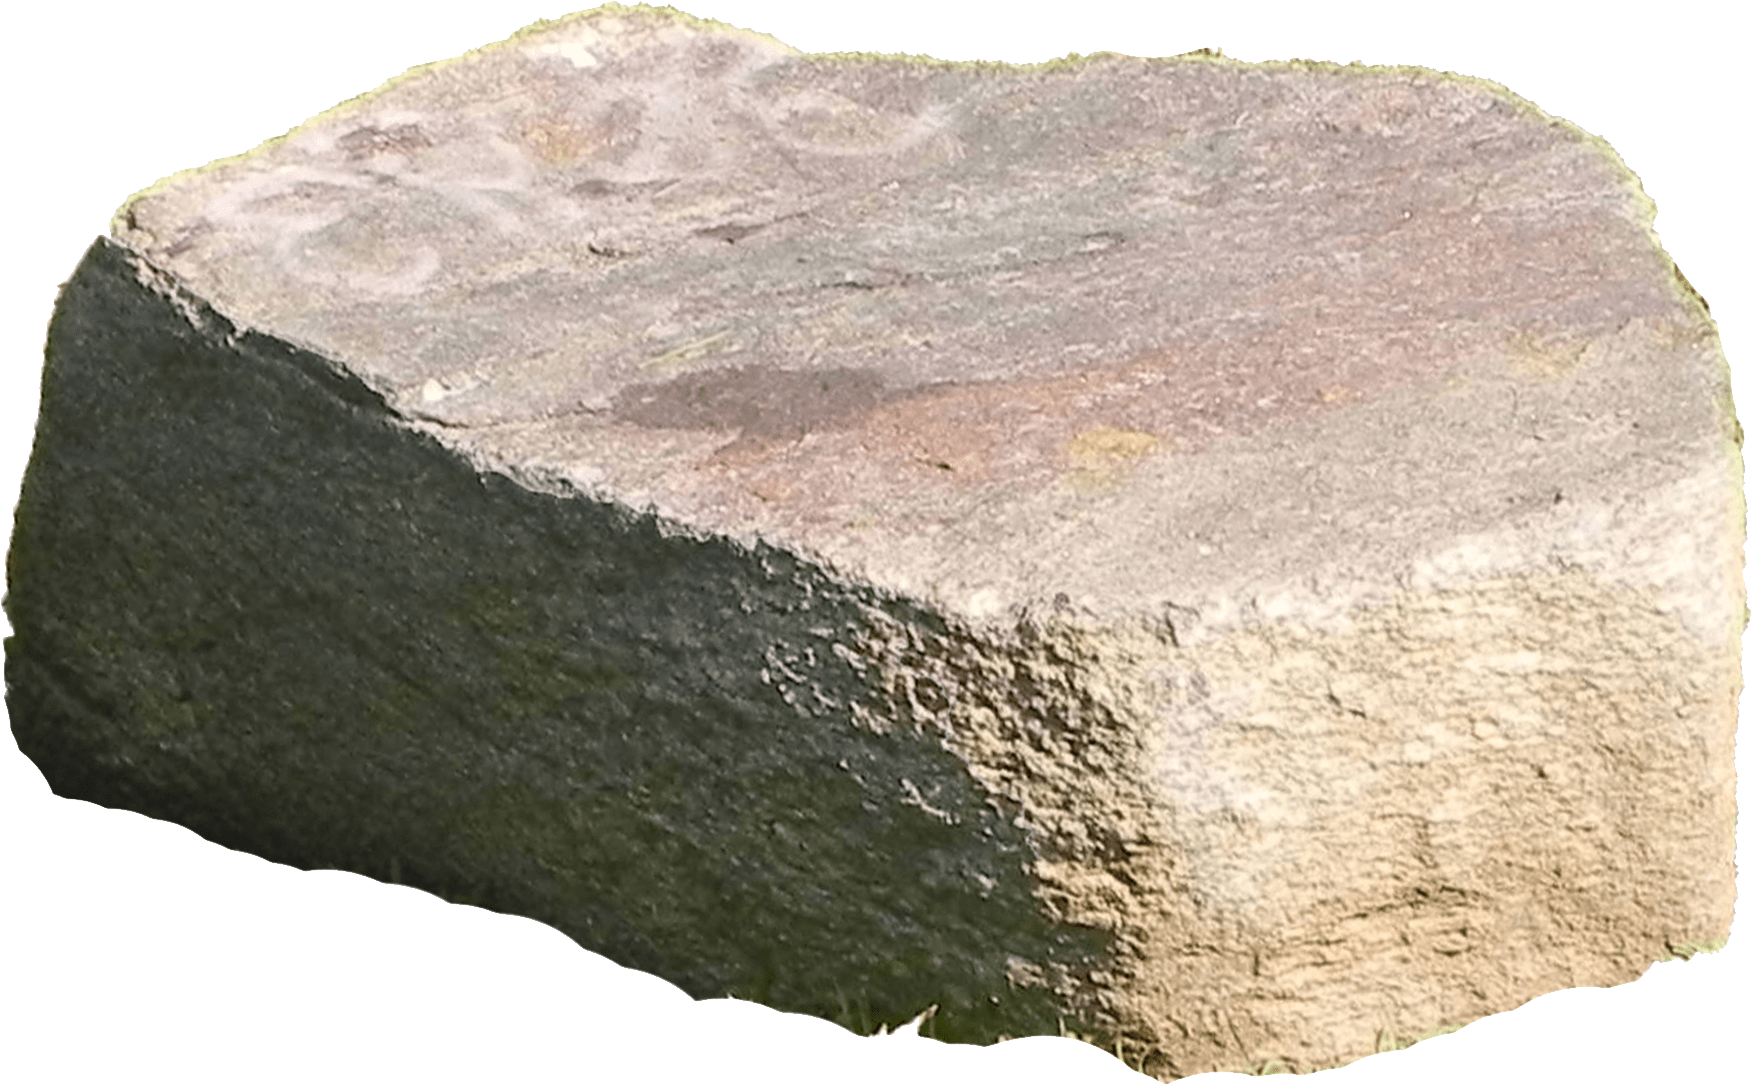 Textured Rock Surface